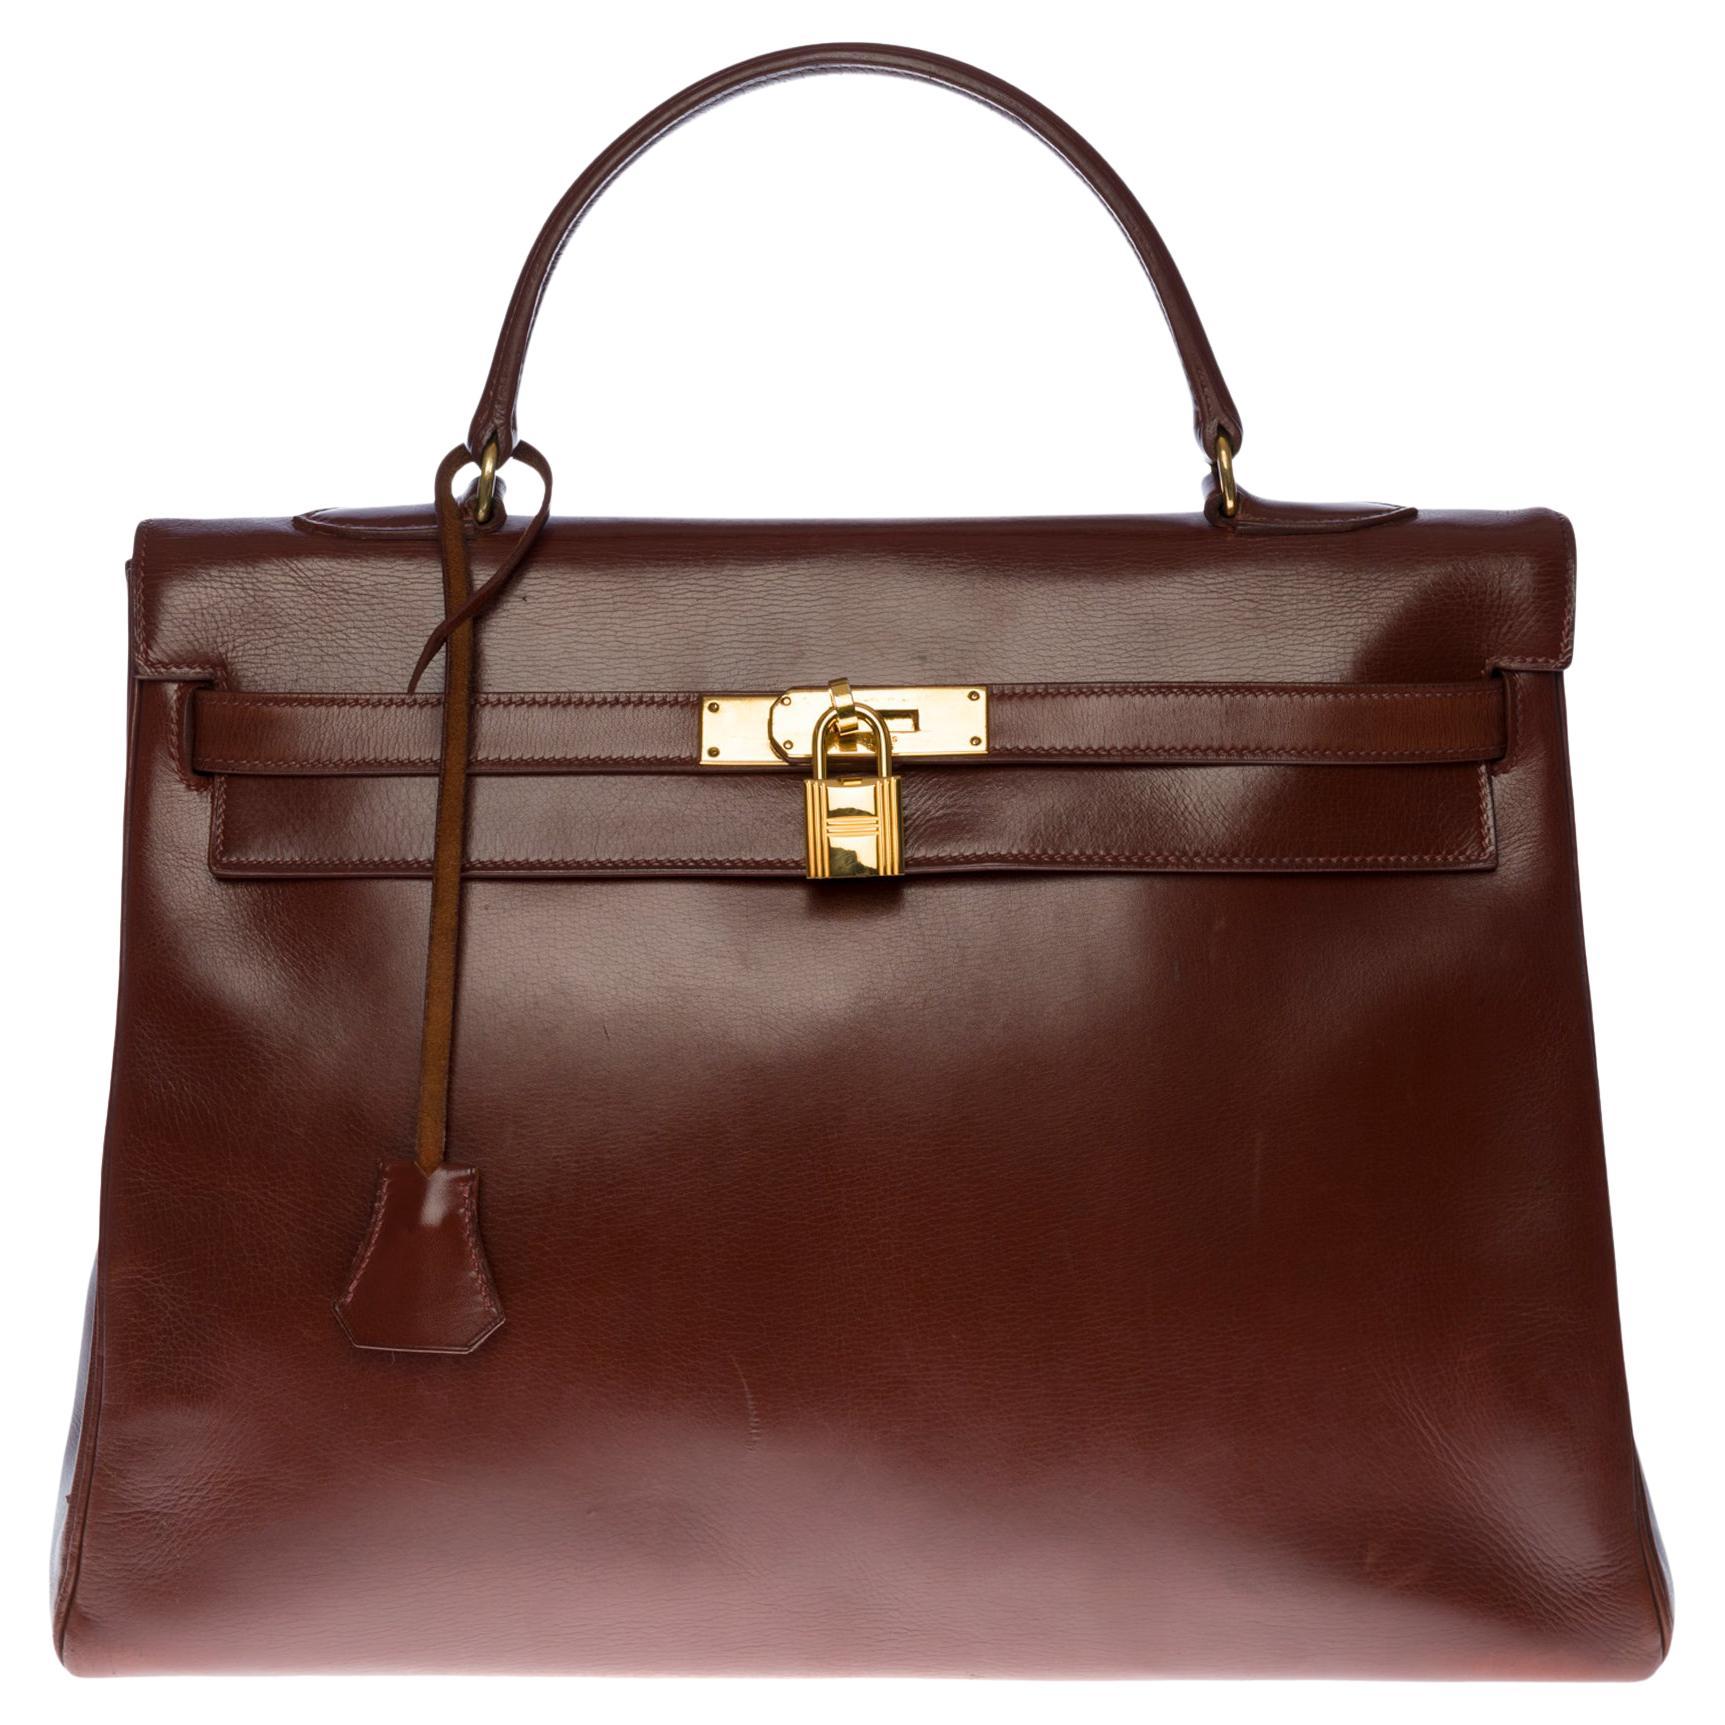 Hermès Kelly 35 retourne "24, FG ST Honoré" handbag in Brown Calf leather, GHW